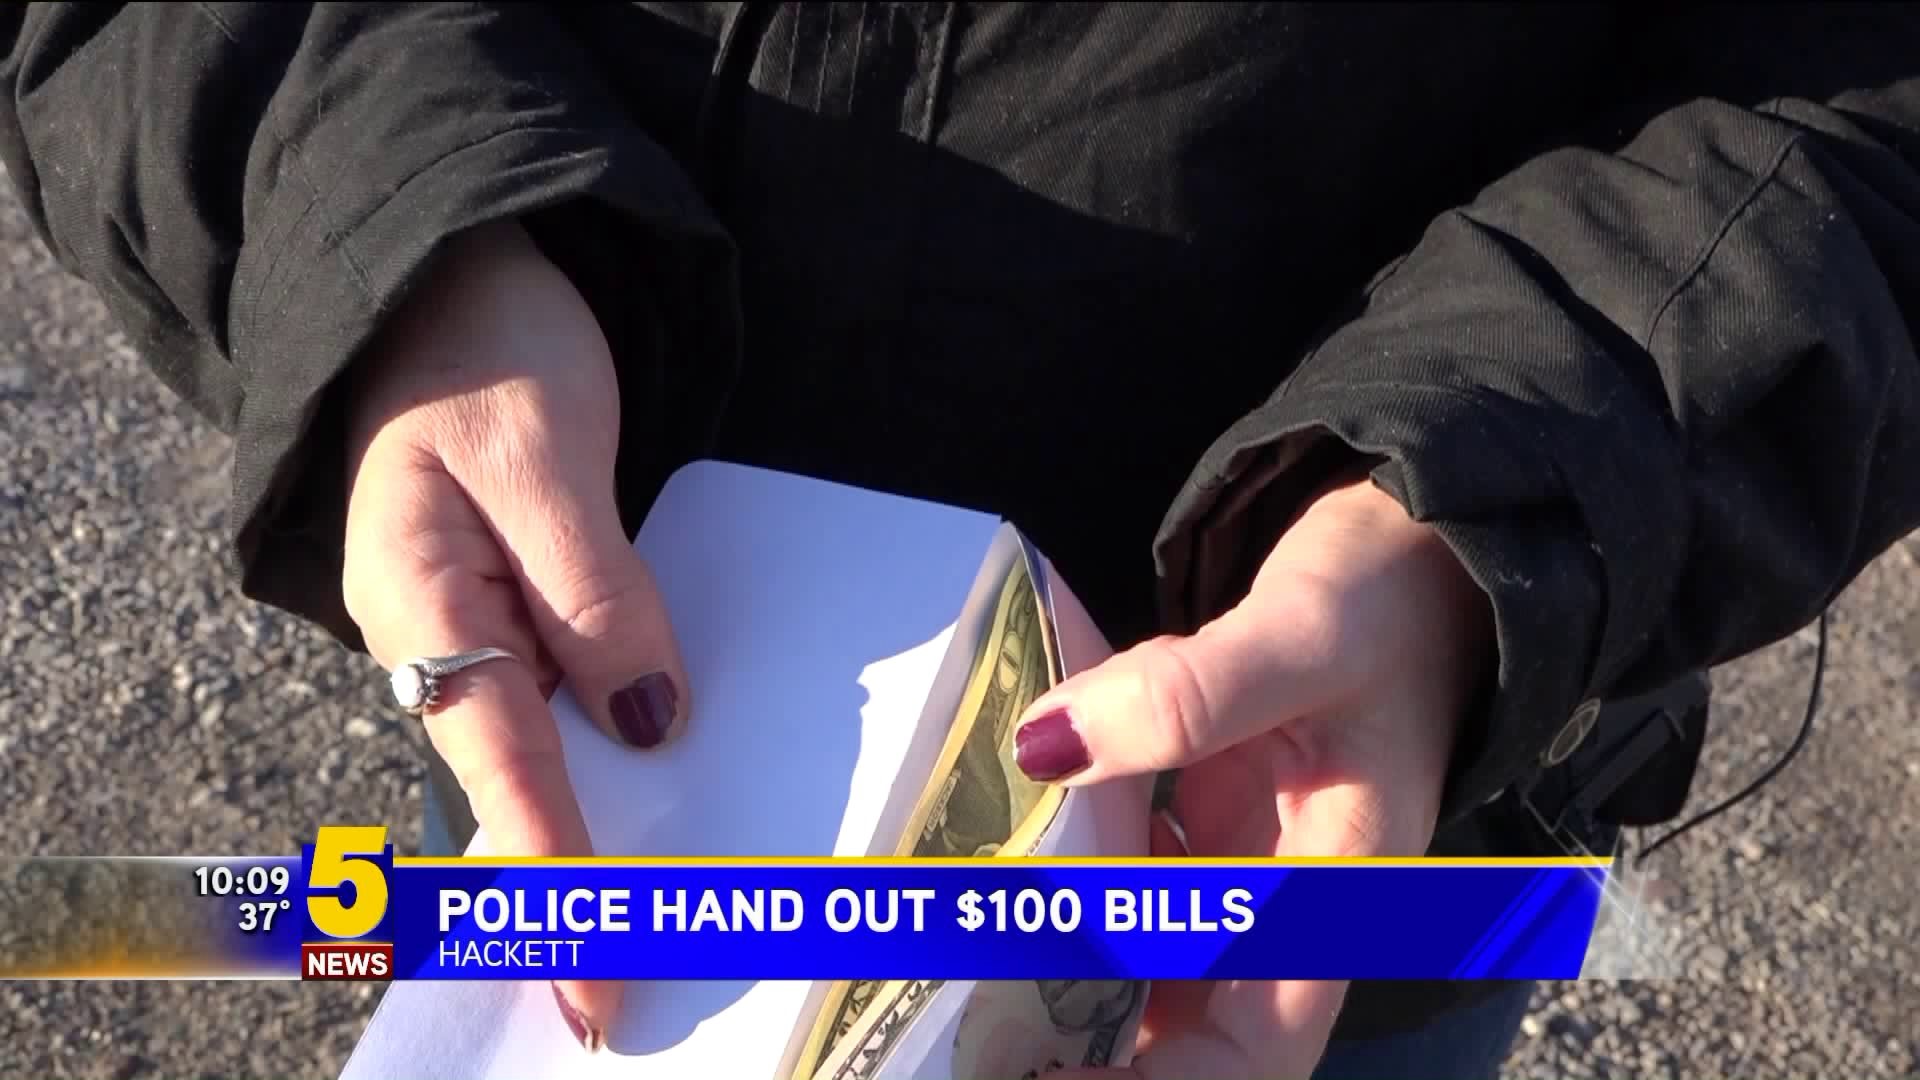 Hackett Police Hand Out $100 Bills